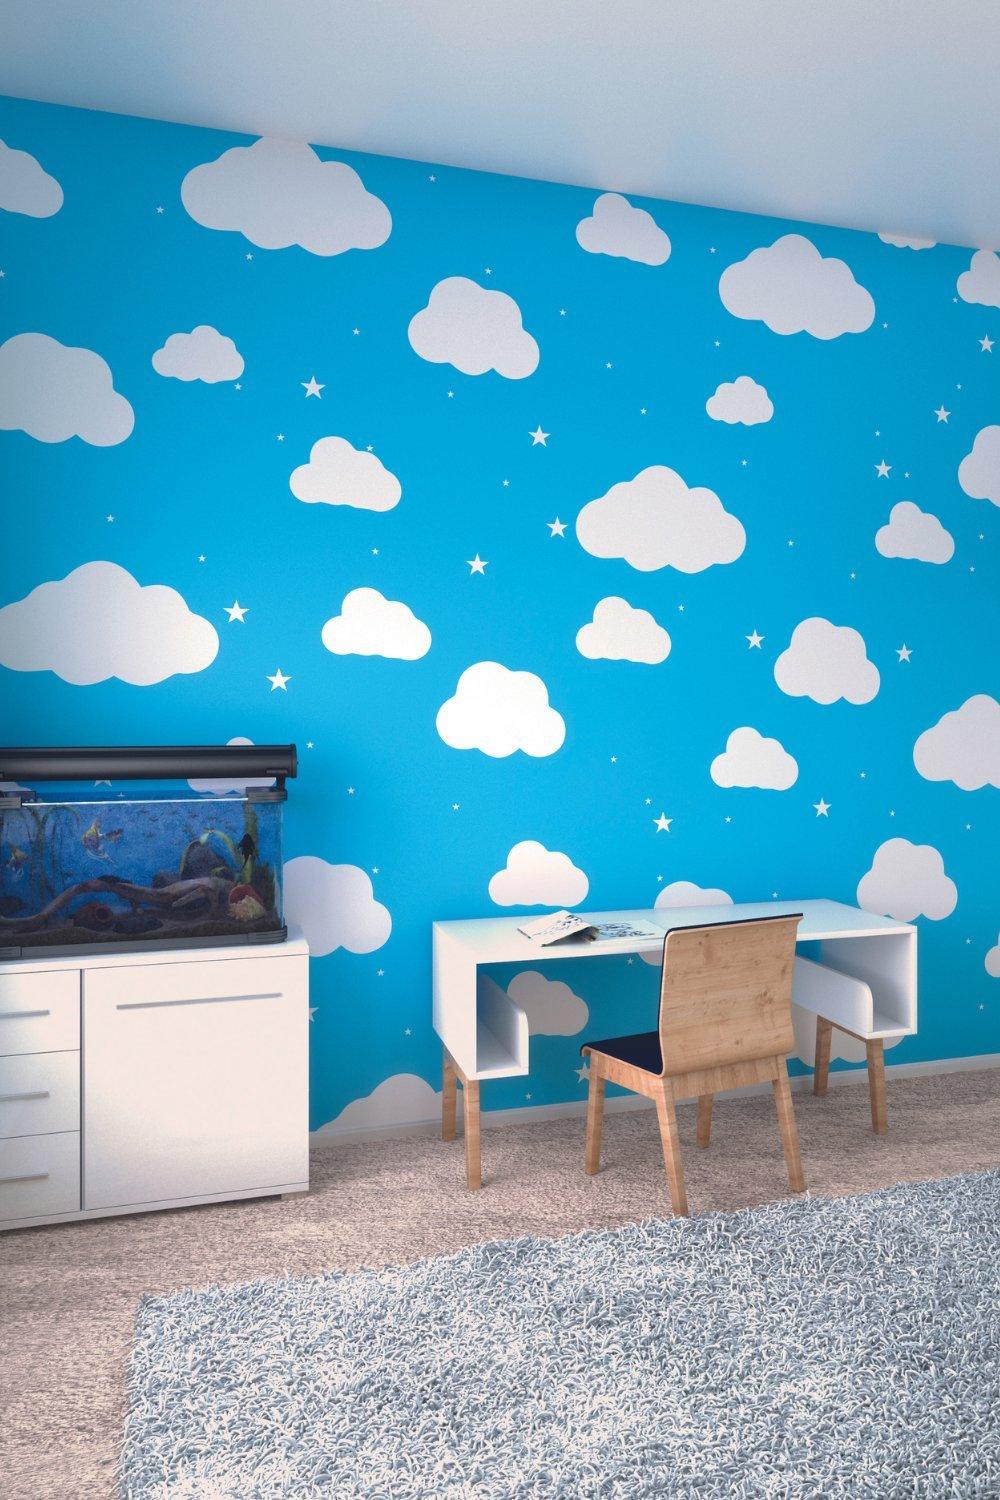 Cartoon Cloudy Sky Blue Matt Smooth Paste the Wall Mural 350cm wide x 280cm high